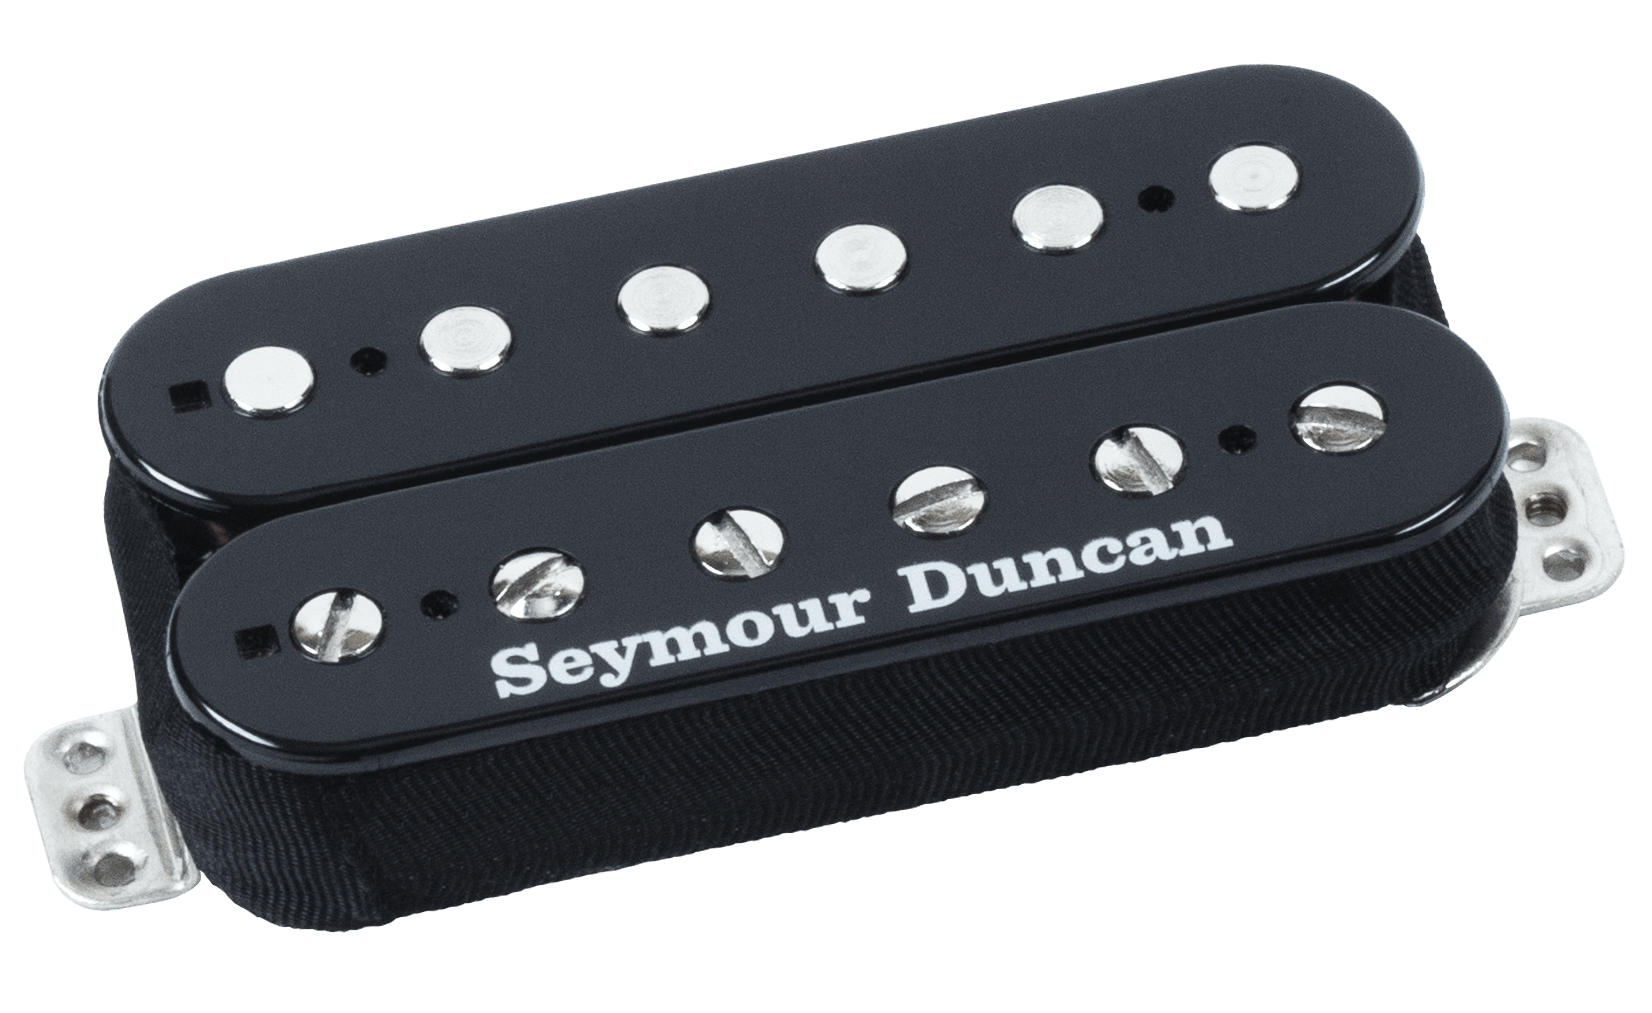 Seymour Duncan Tb-6 Duncan Distortion Trembucker - Bridge - Black - Micro Guitare Electrique - Variation 2